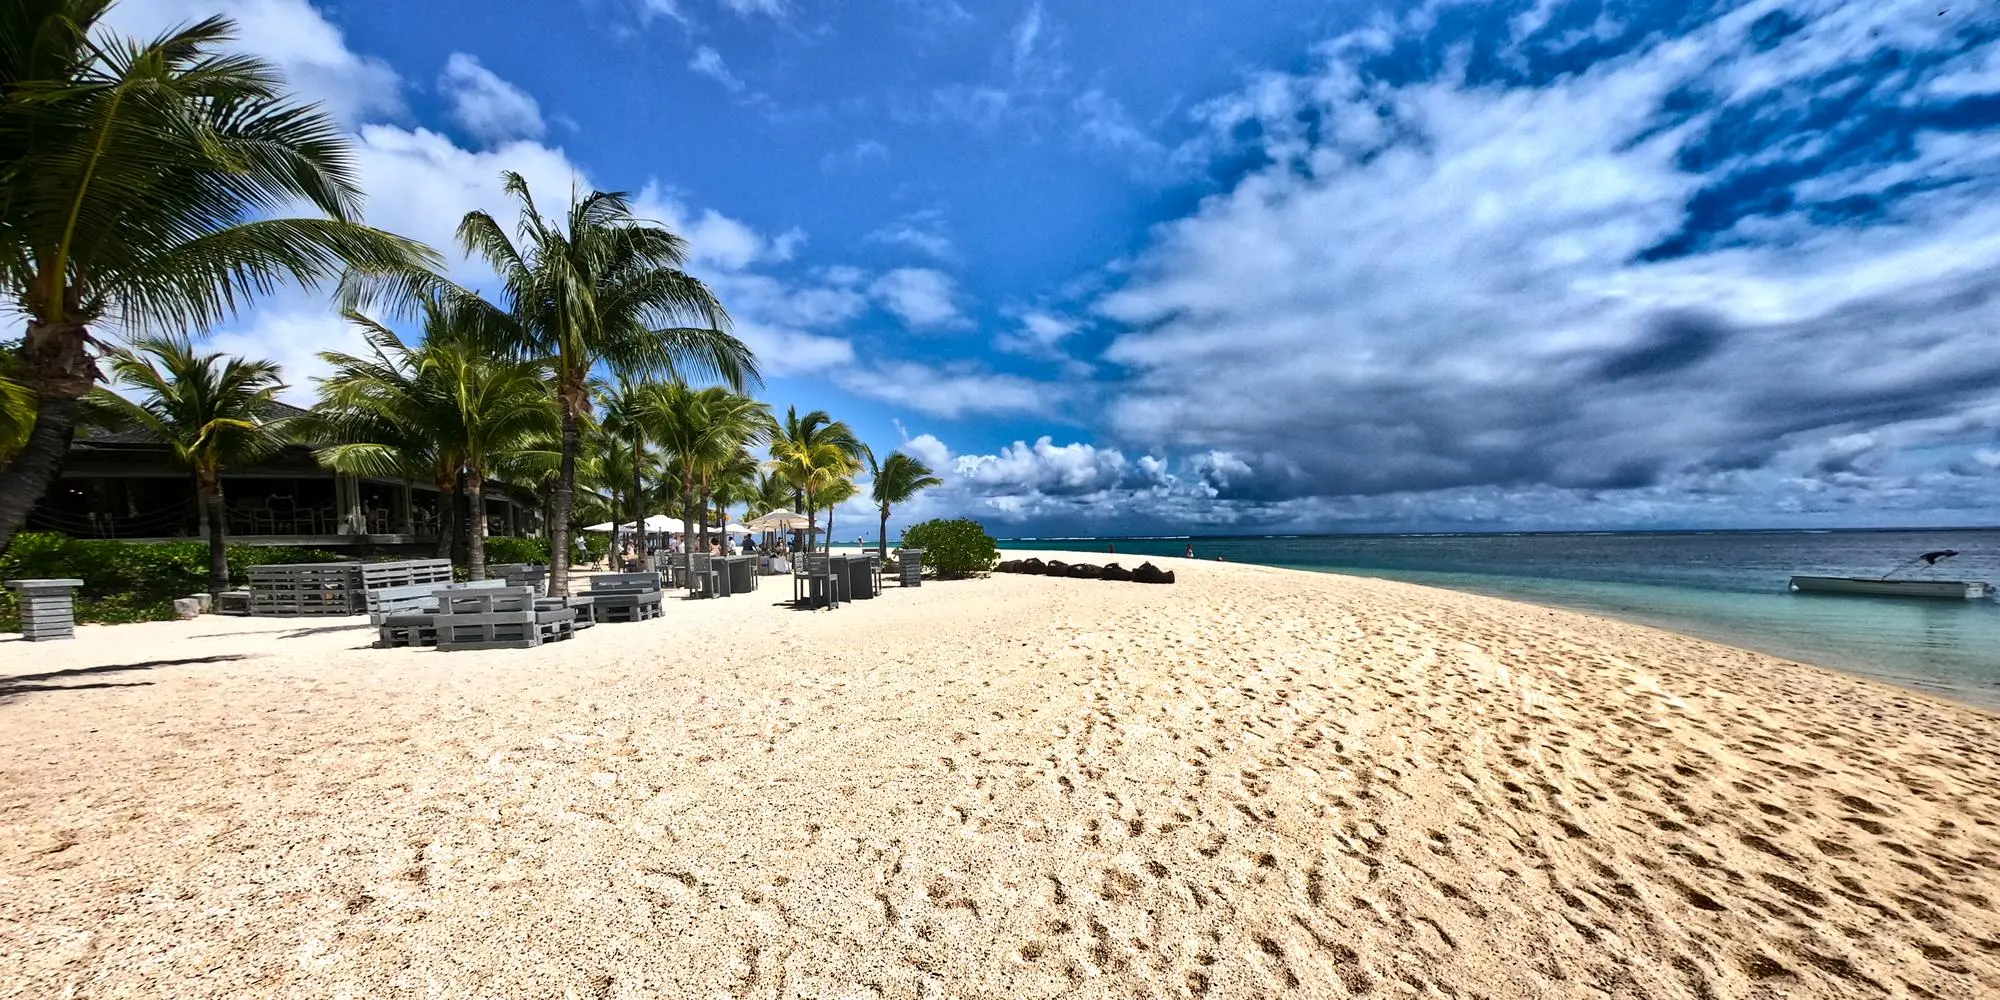 Migliori spiagge Mauritius - La paradisiaca spiaggia di sabbia bianca di Le Morne a Mauritius - Best beaches in Mauritius